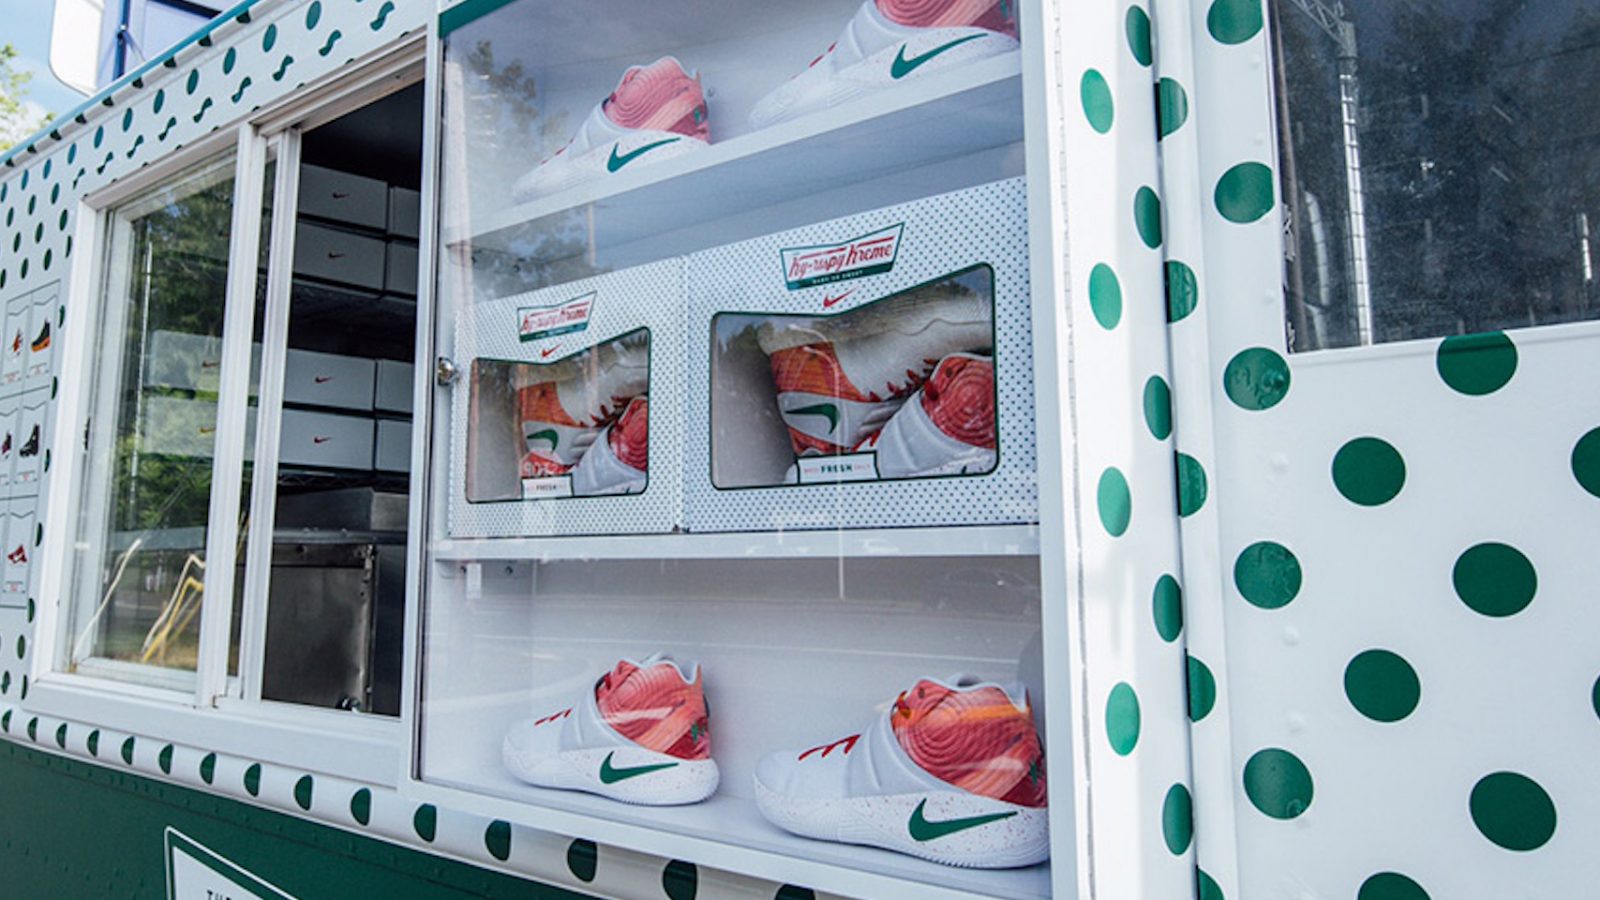 “Ky-Rispy Kreme” Nike Collaborates with Krispy Kreme